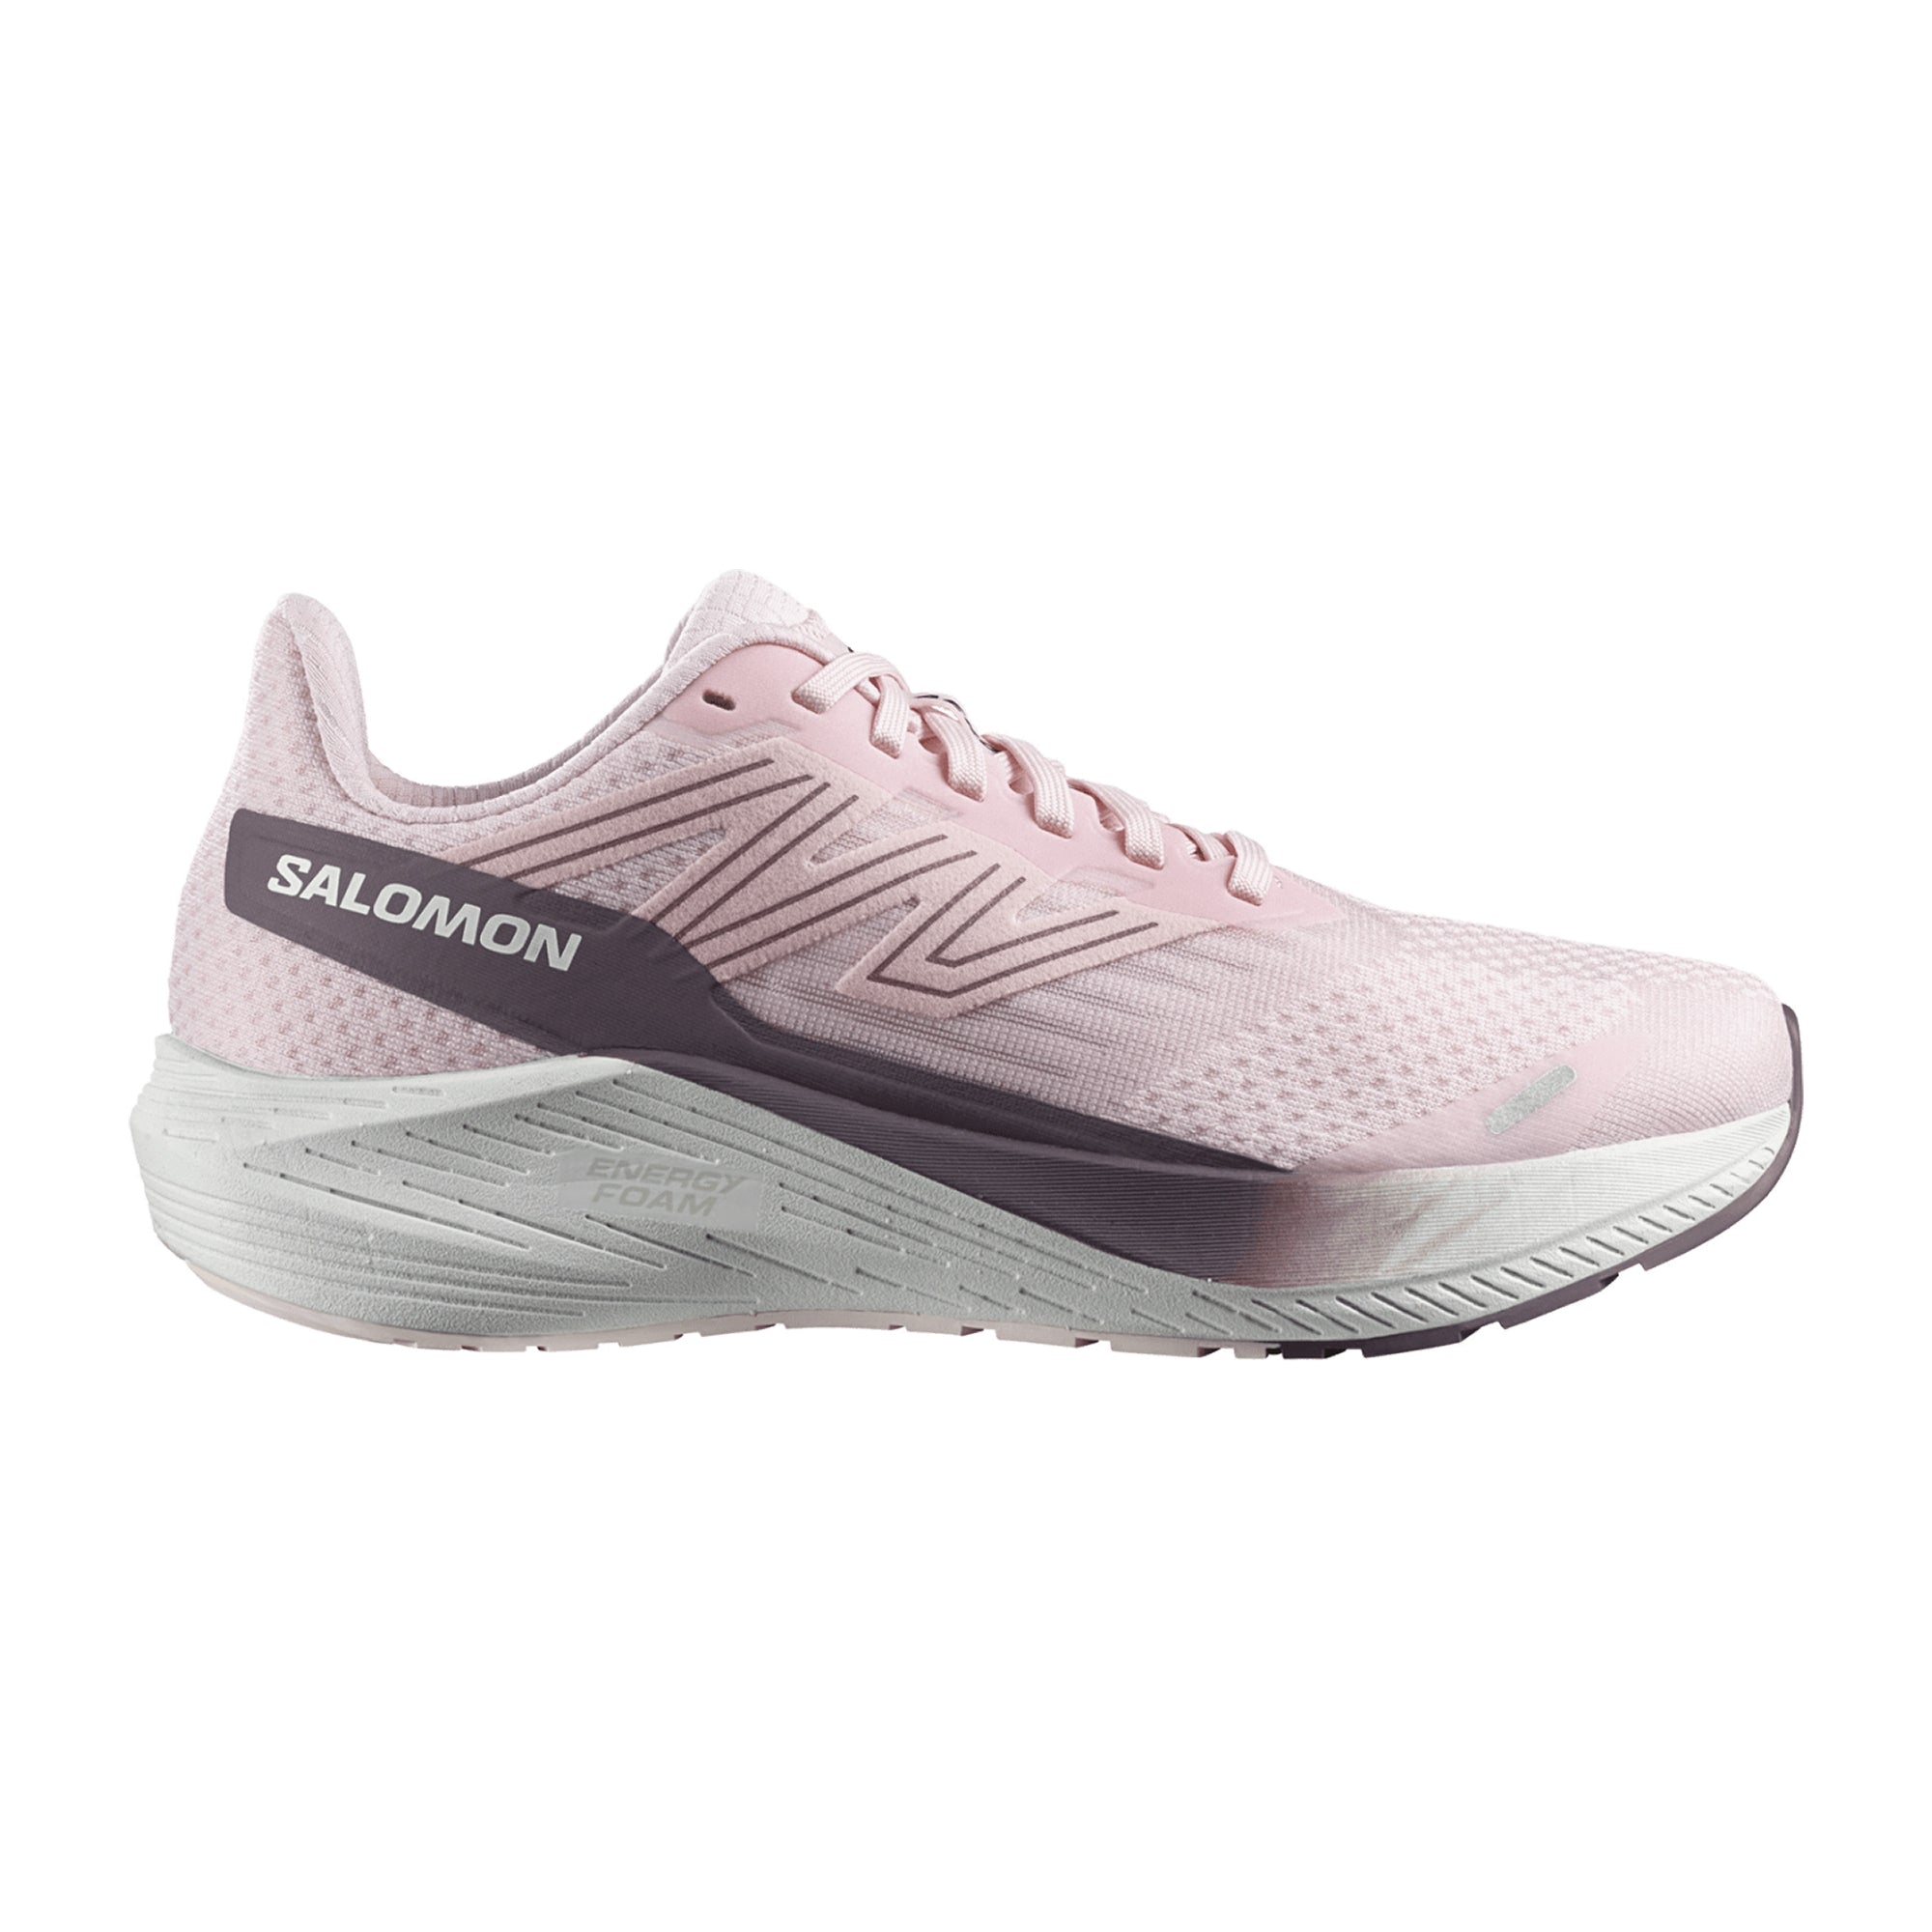 Salomon Aero Blaze W for women, pink, shoes